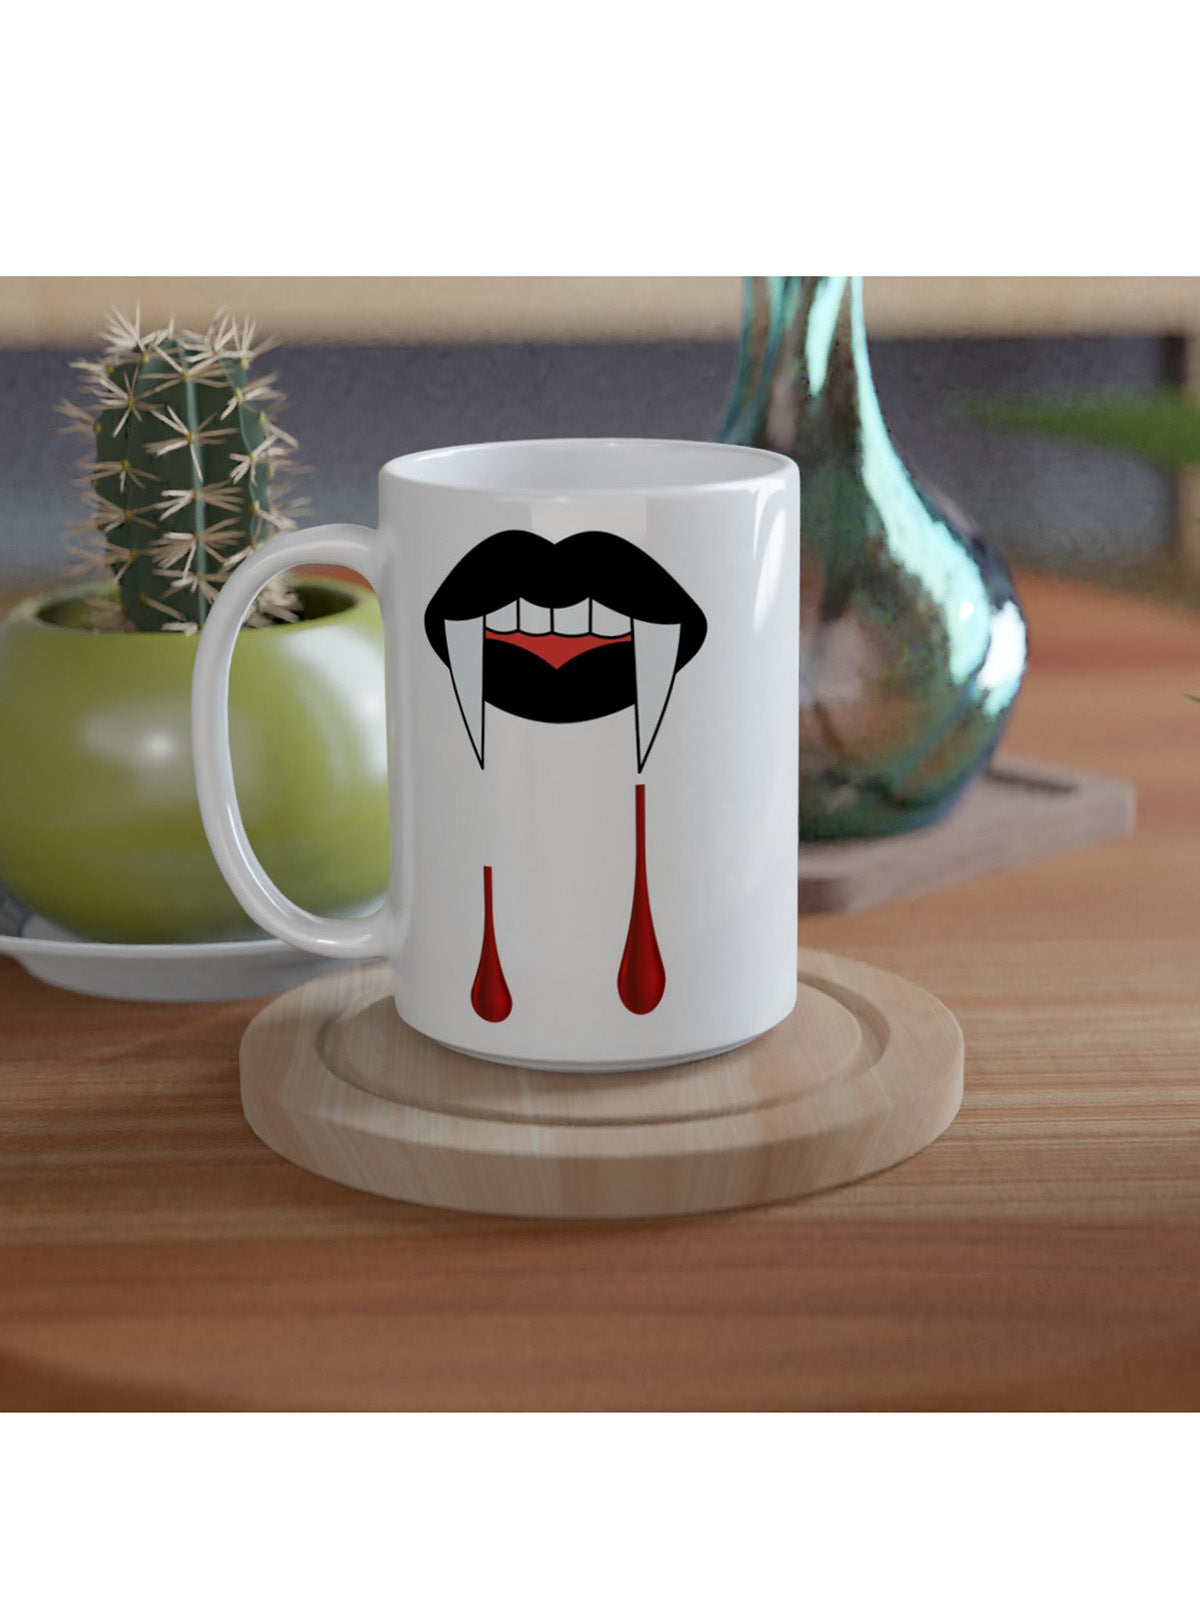 Dripping Fangs Halloween - White 15oz Ceramic Mug